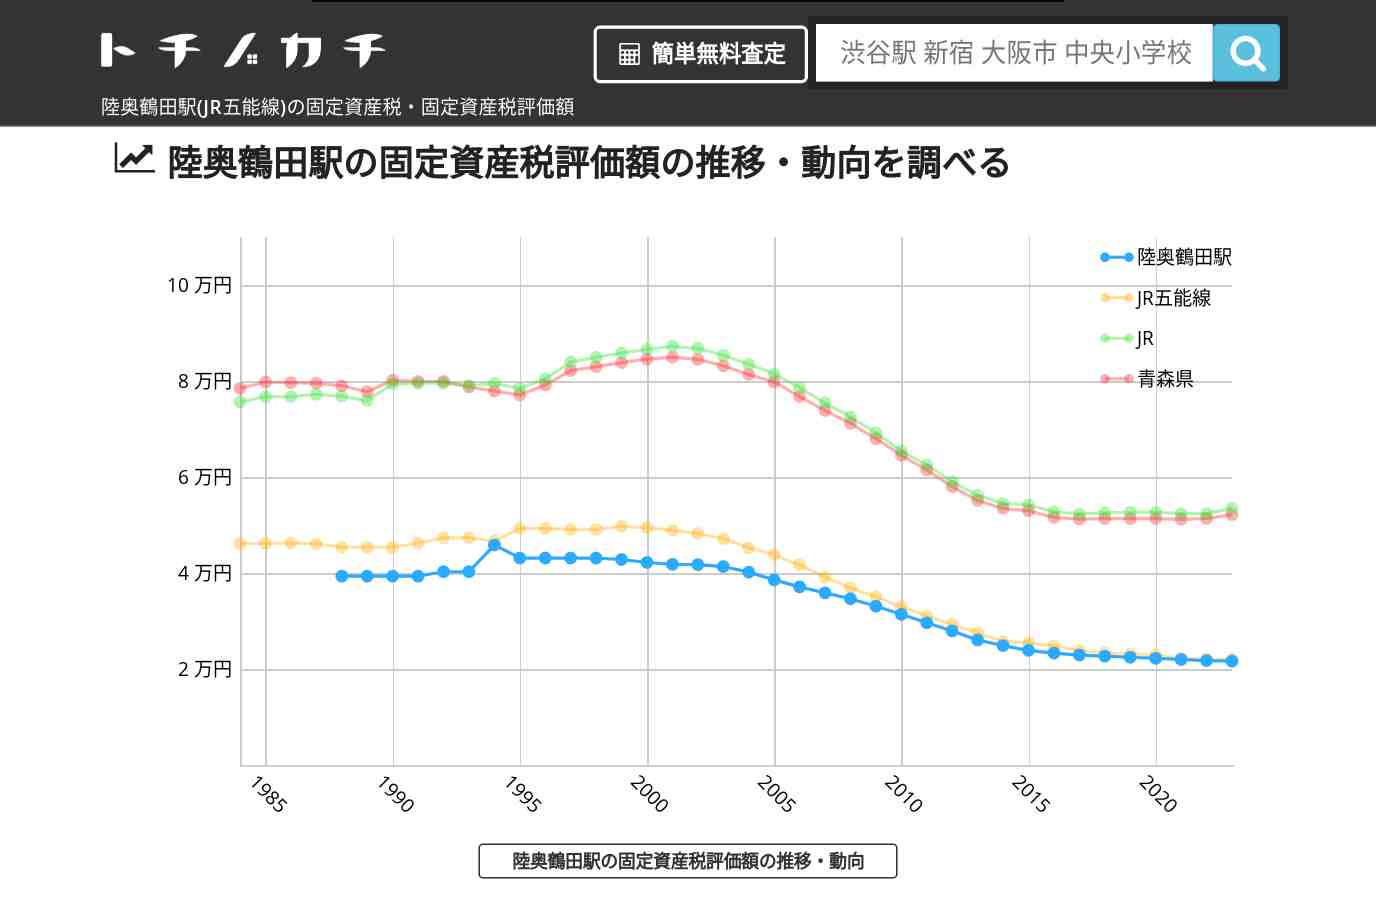 陸奥鶴田駅(JR五能線)の固定資産税・固定資産税評価額 | トチノカチ